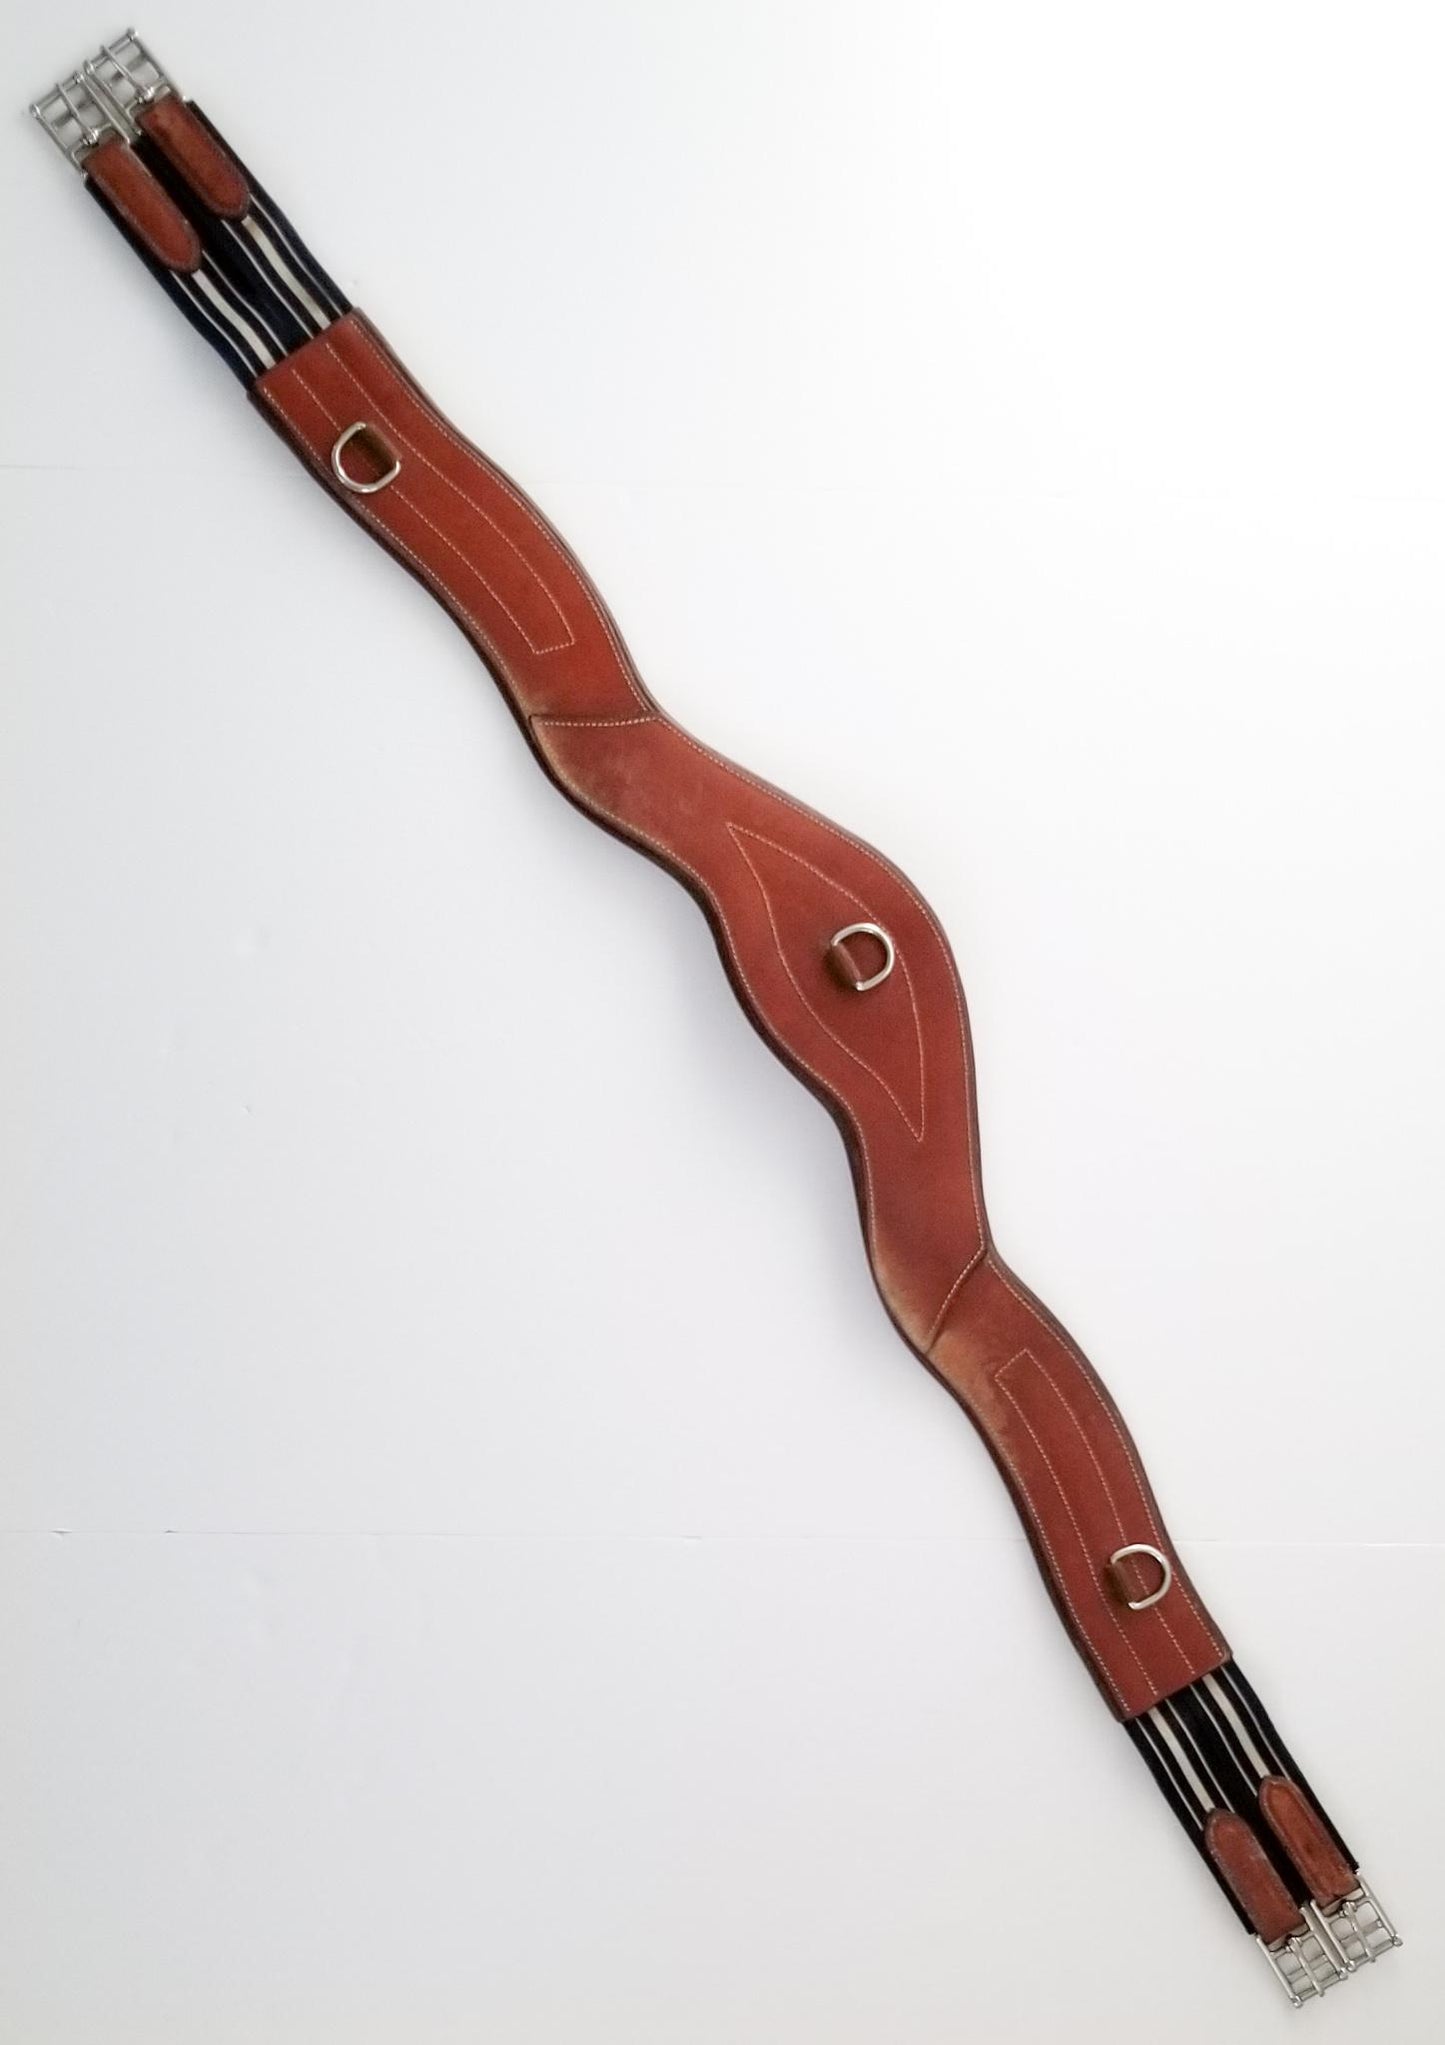 Contoured Leather Girth - Light Brown - 132cm/52"